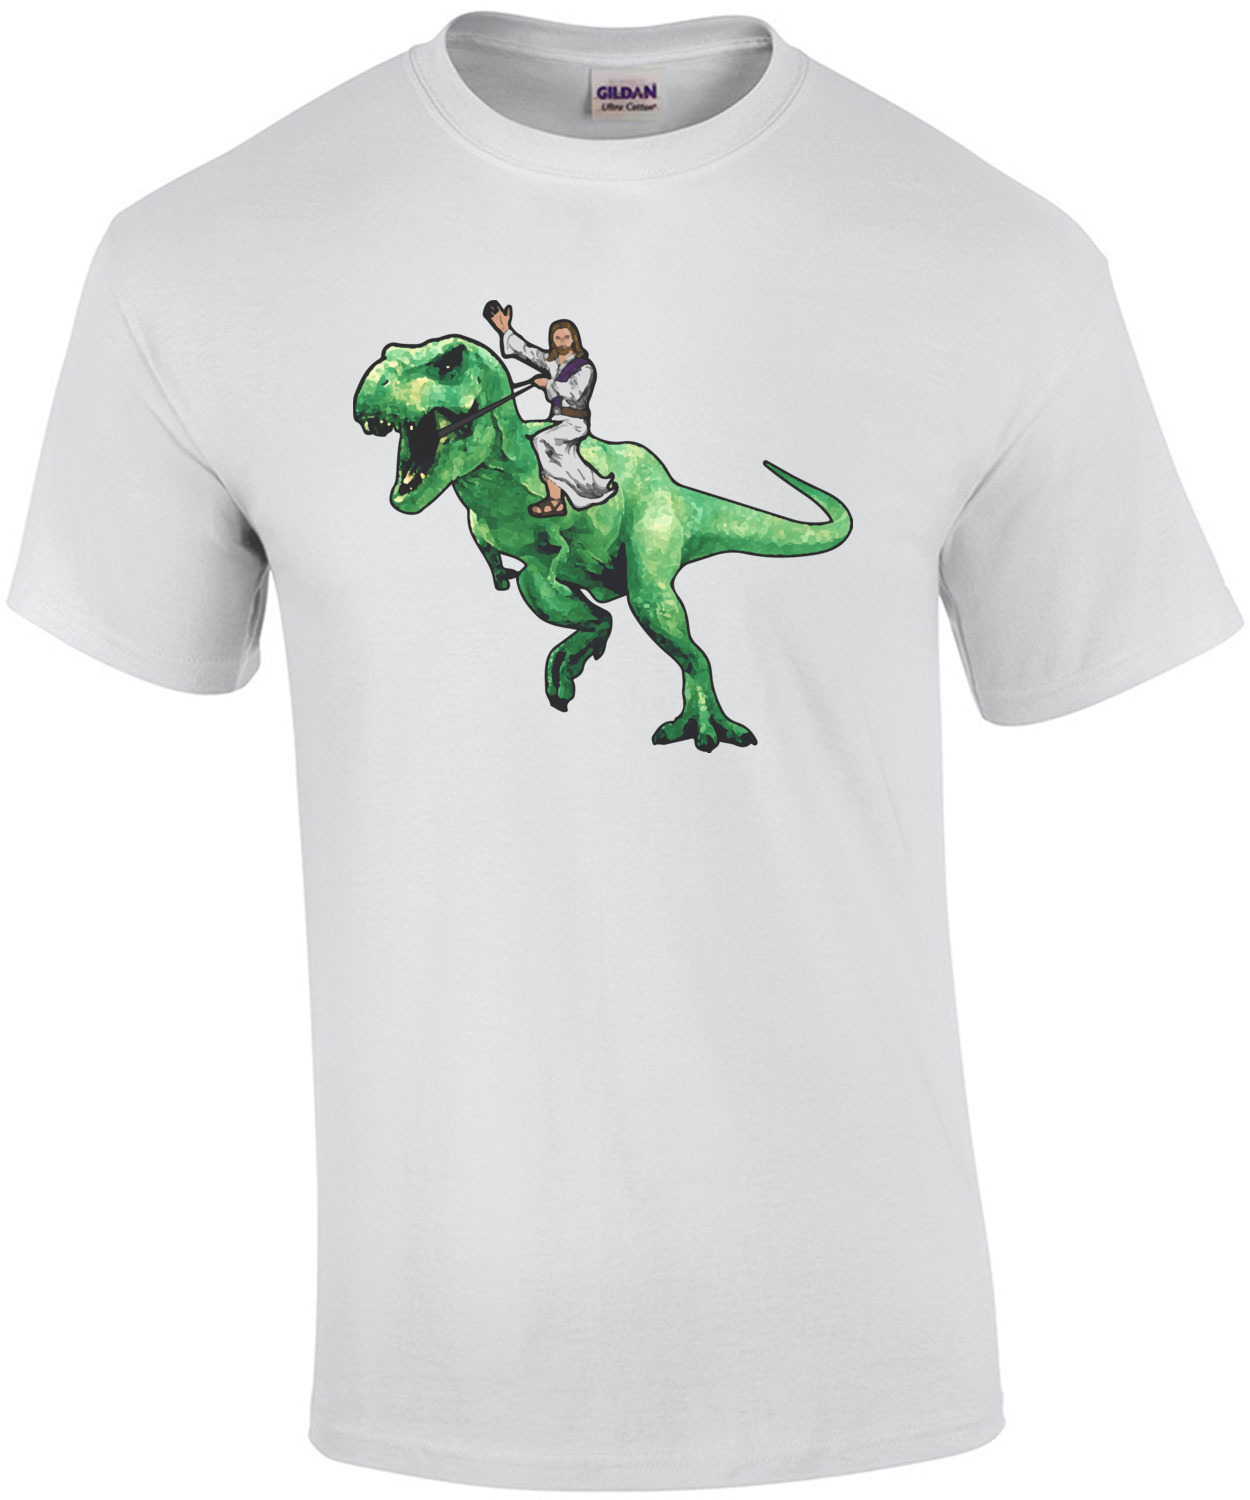 jesus riding a dinosaur t-shirt shirt